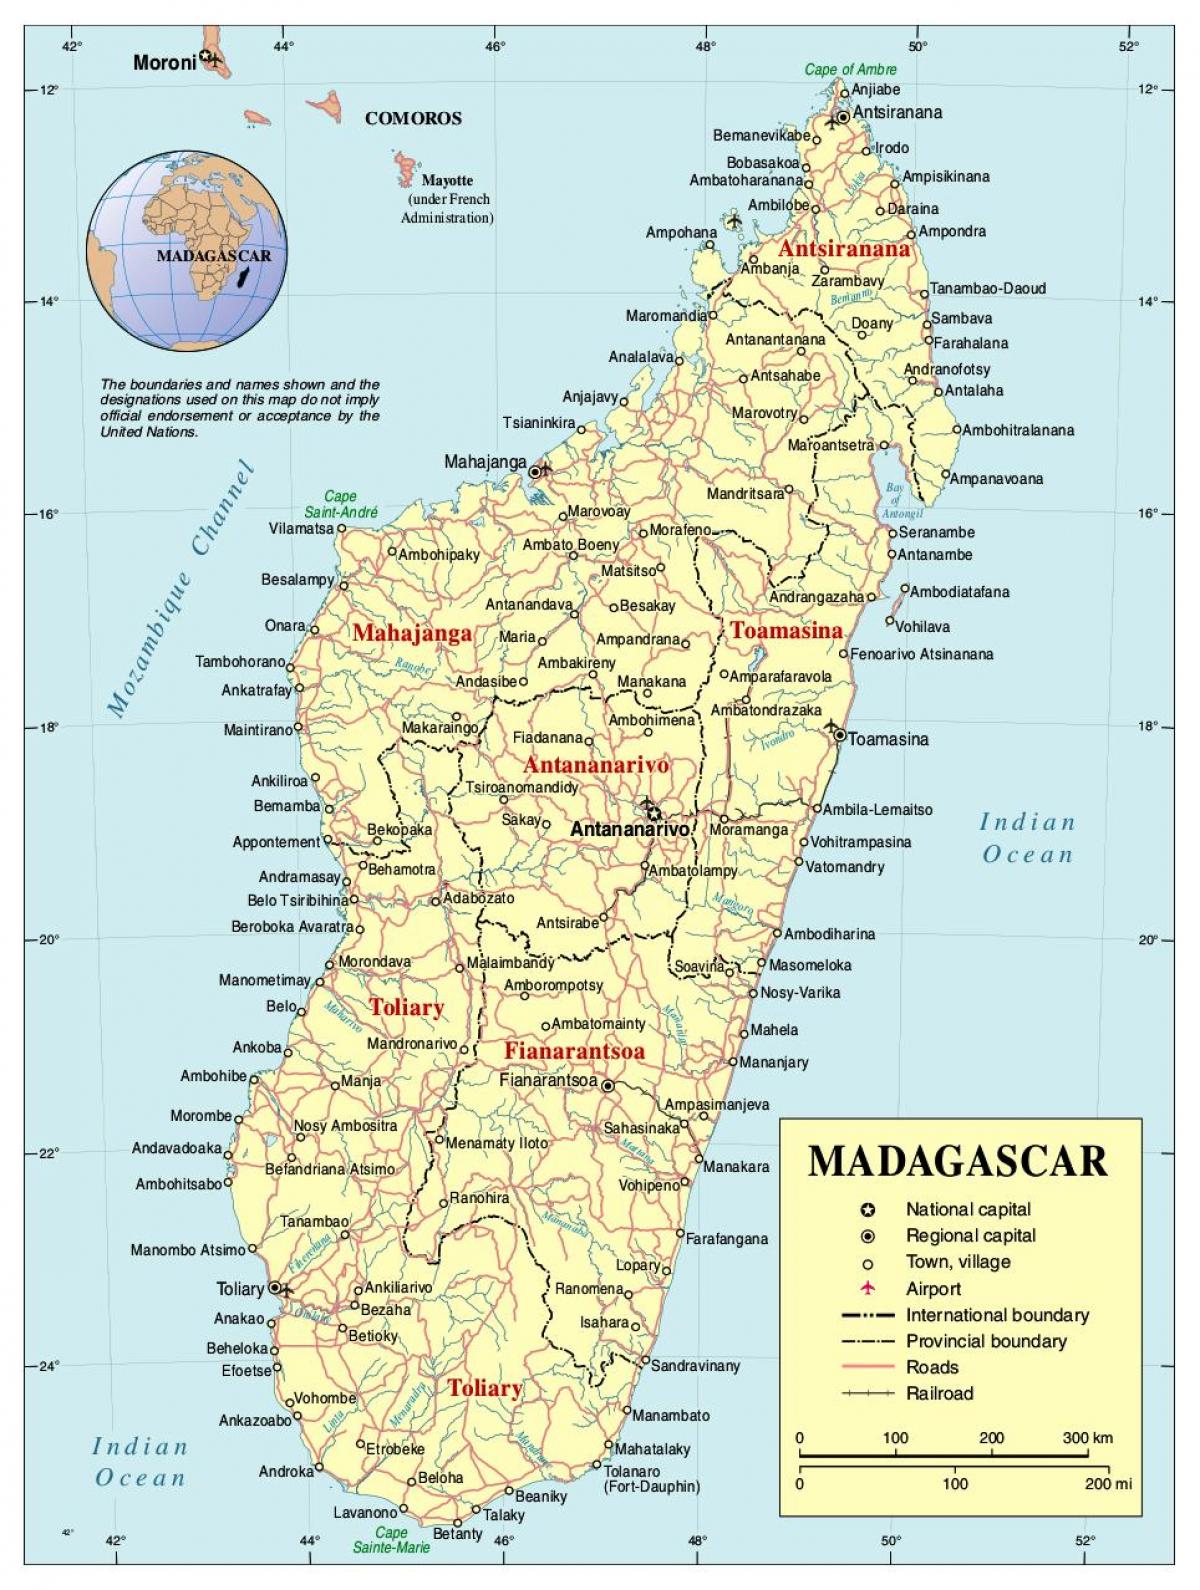 kat jeyografik nan Madagascar wout